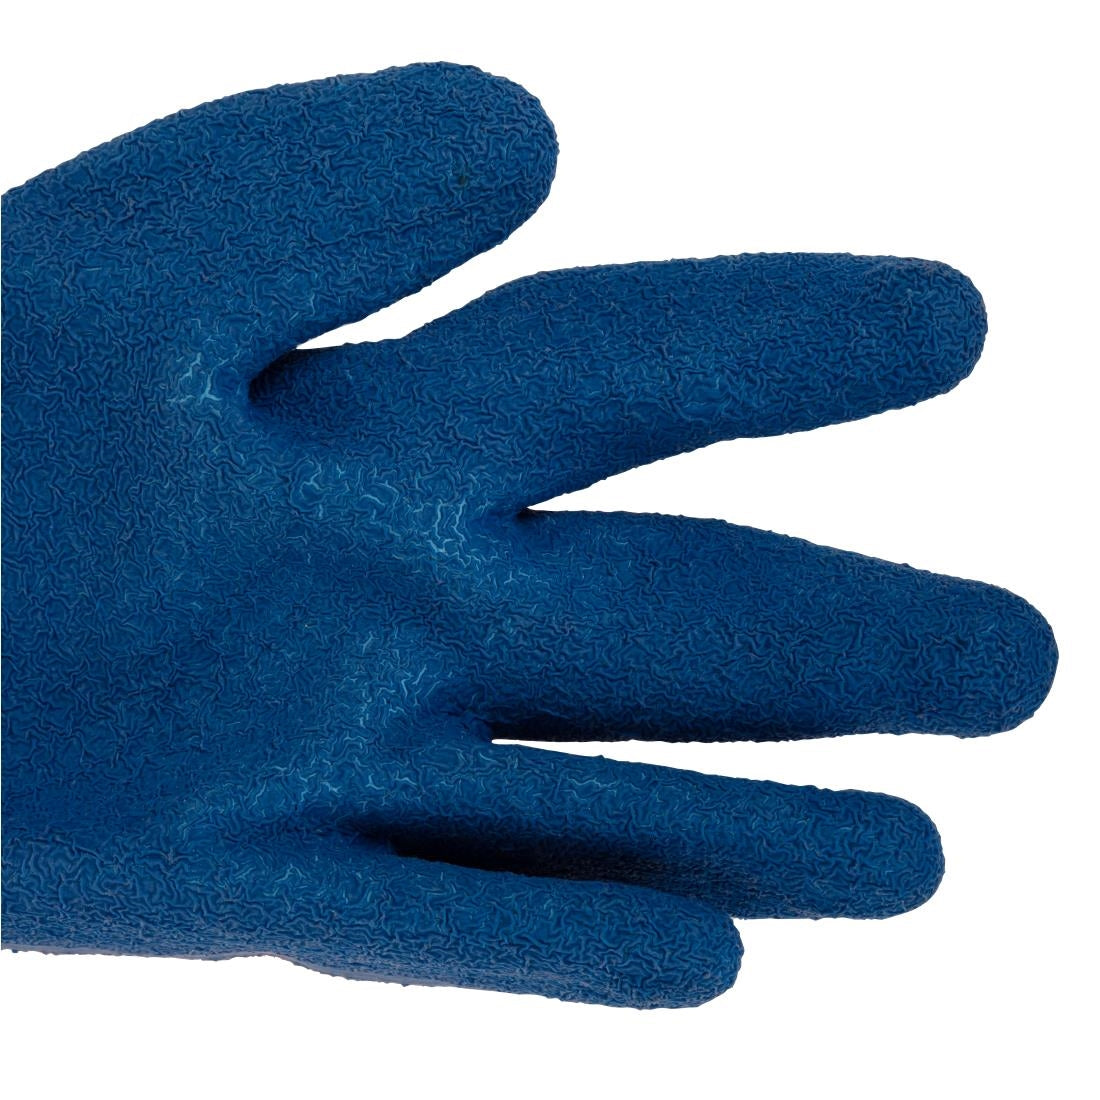 Freezer Gloves JD Catering Equipment Solutions Ltd